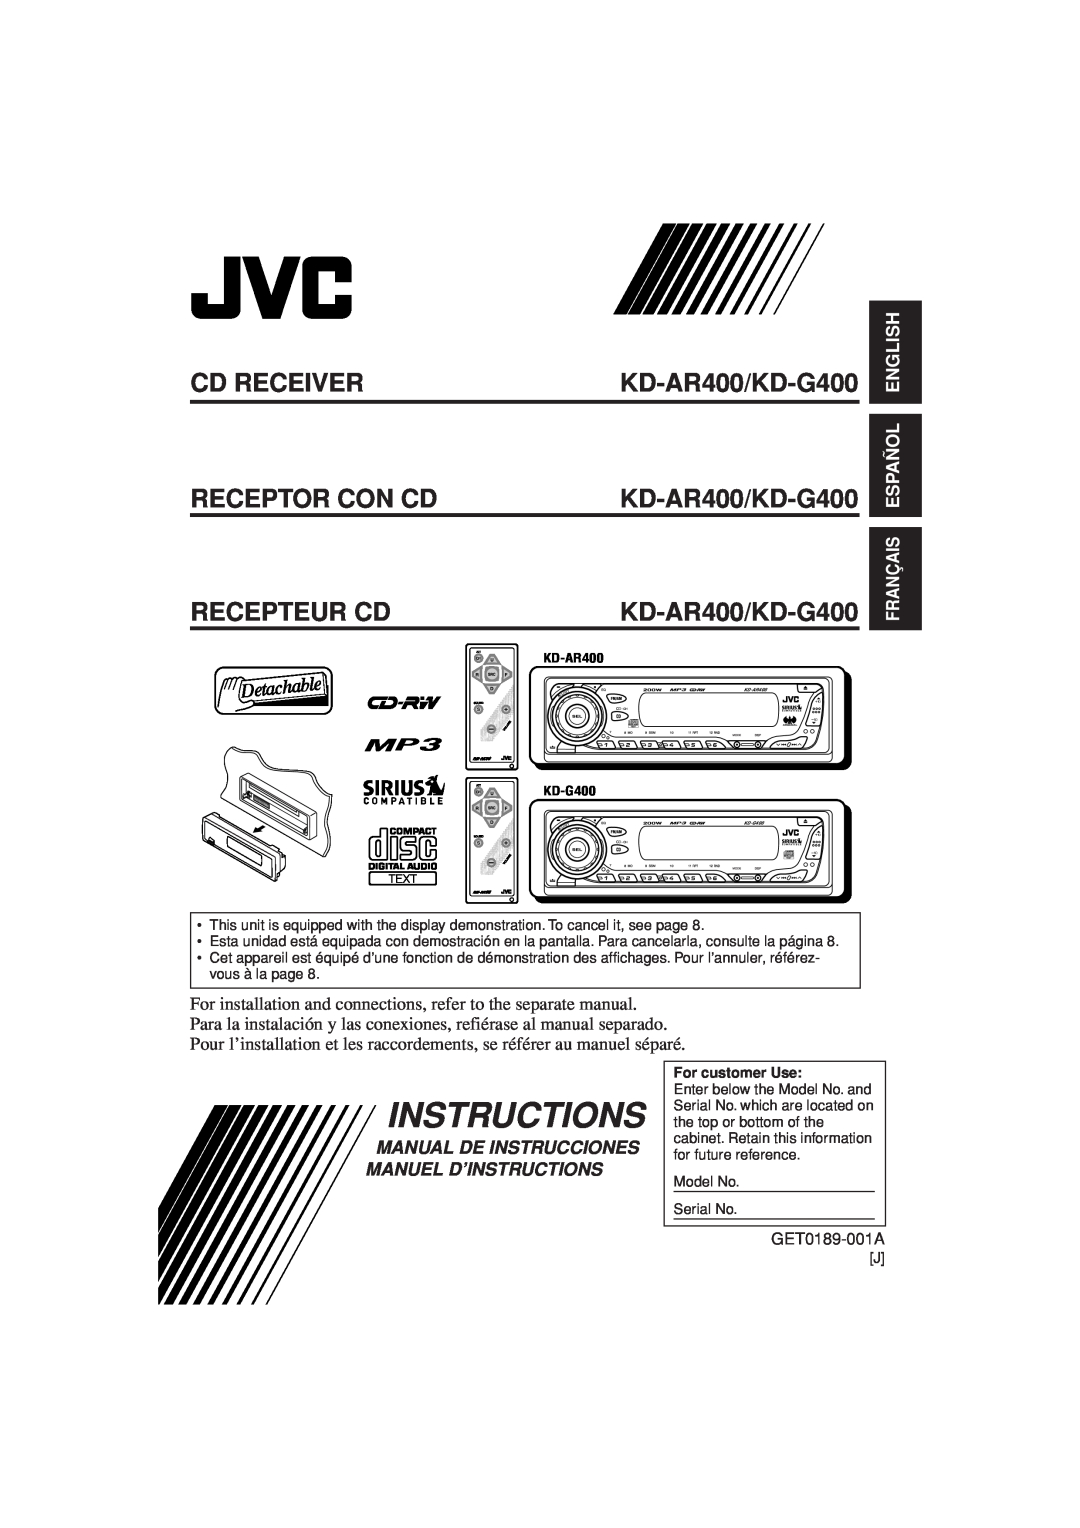 JVC manual Cd Receiver, Receptor Con Cd, Recepteur Cd, KD-AR400/KD-G400, English Español, Français, Instructions 